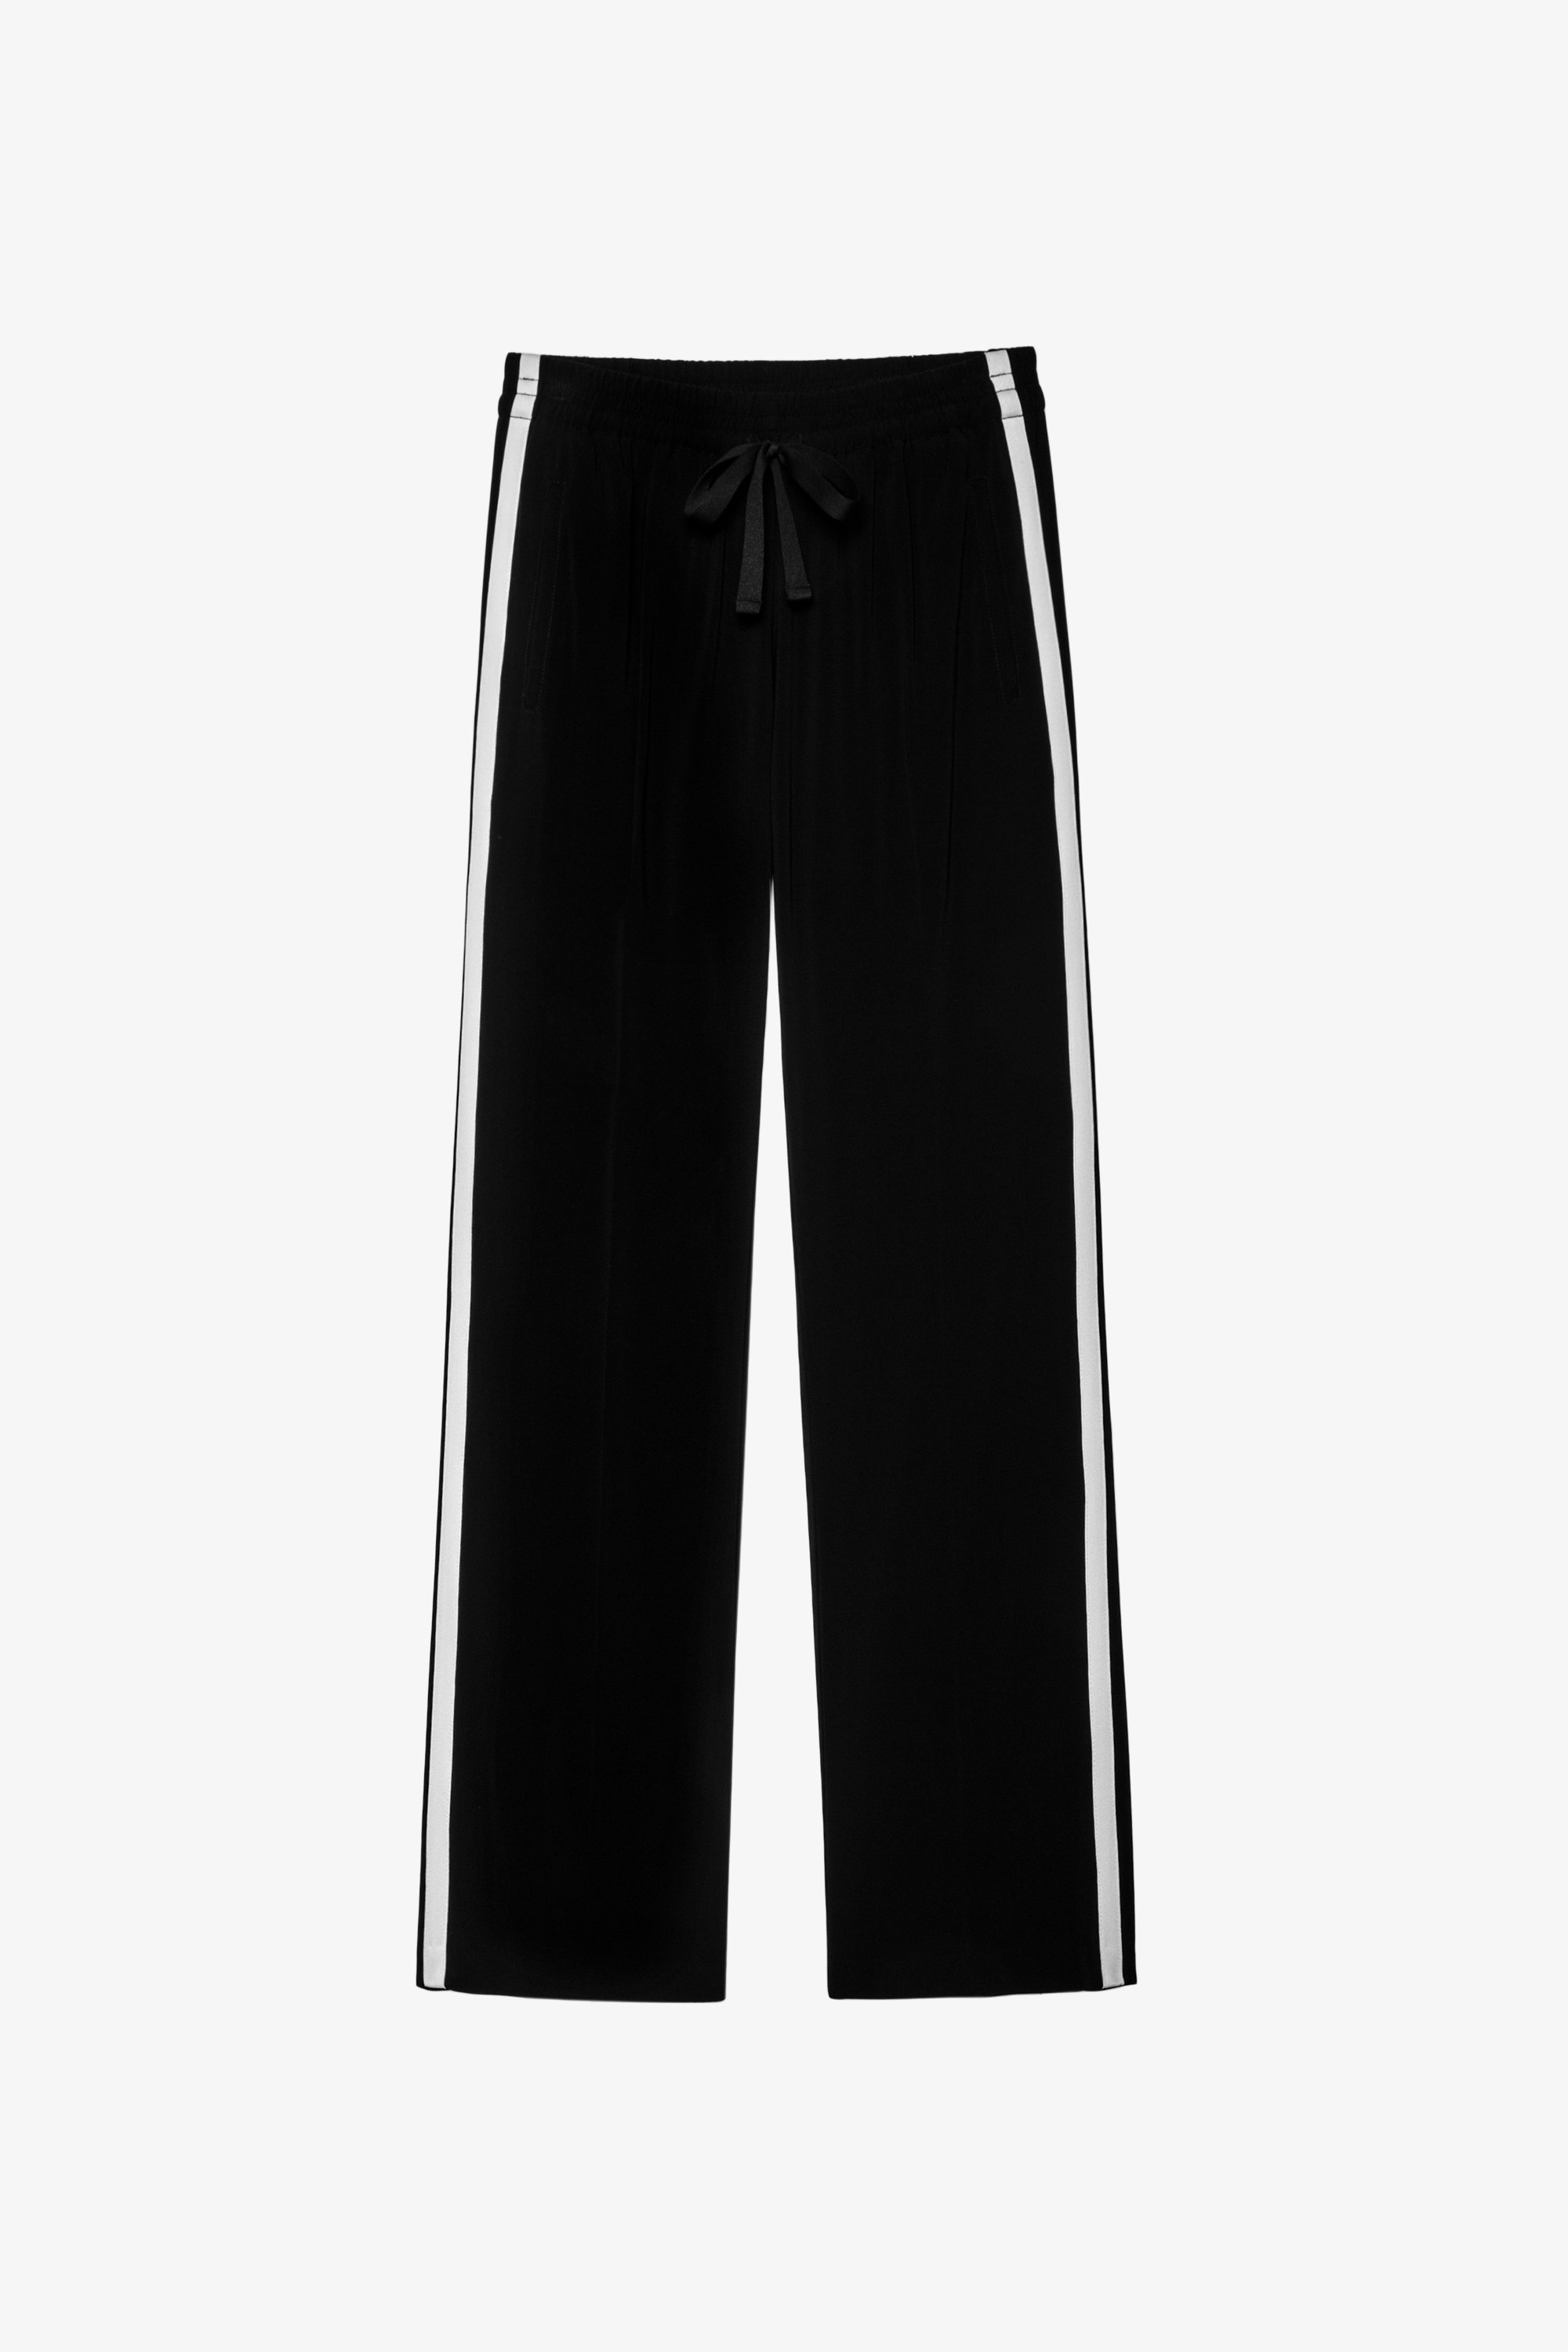 Pomy パンツ Women's flowing black trousers.